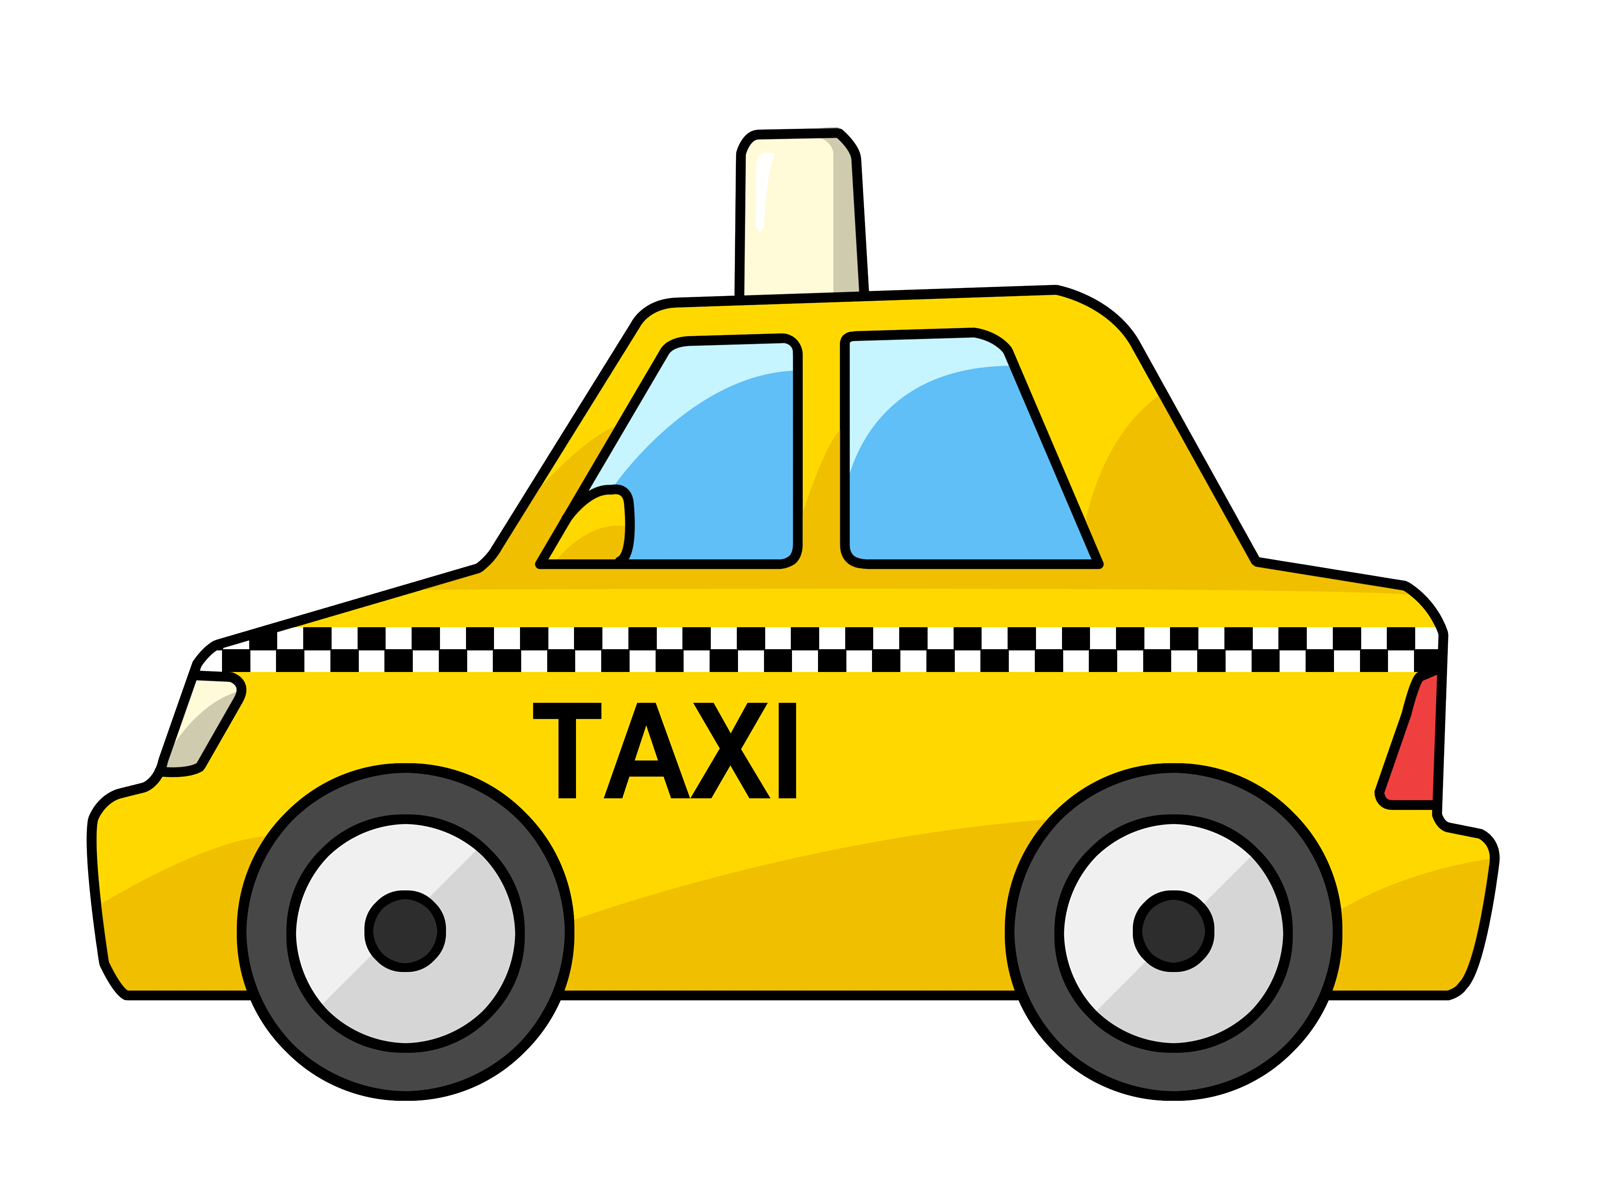 A friendly female taxi driver